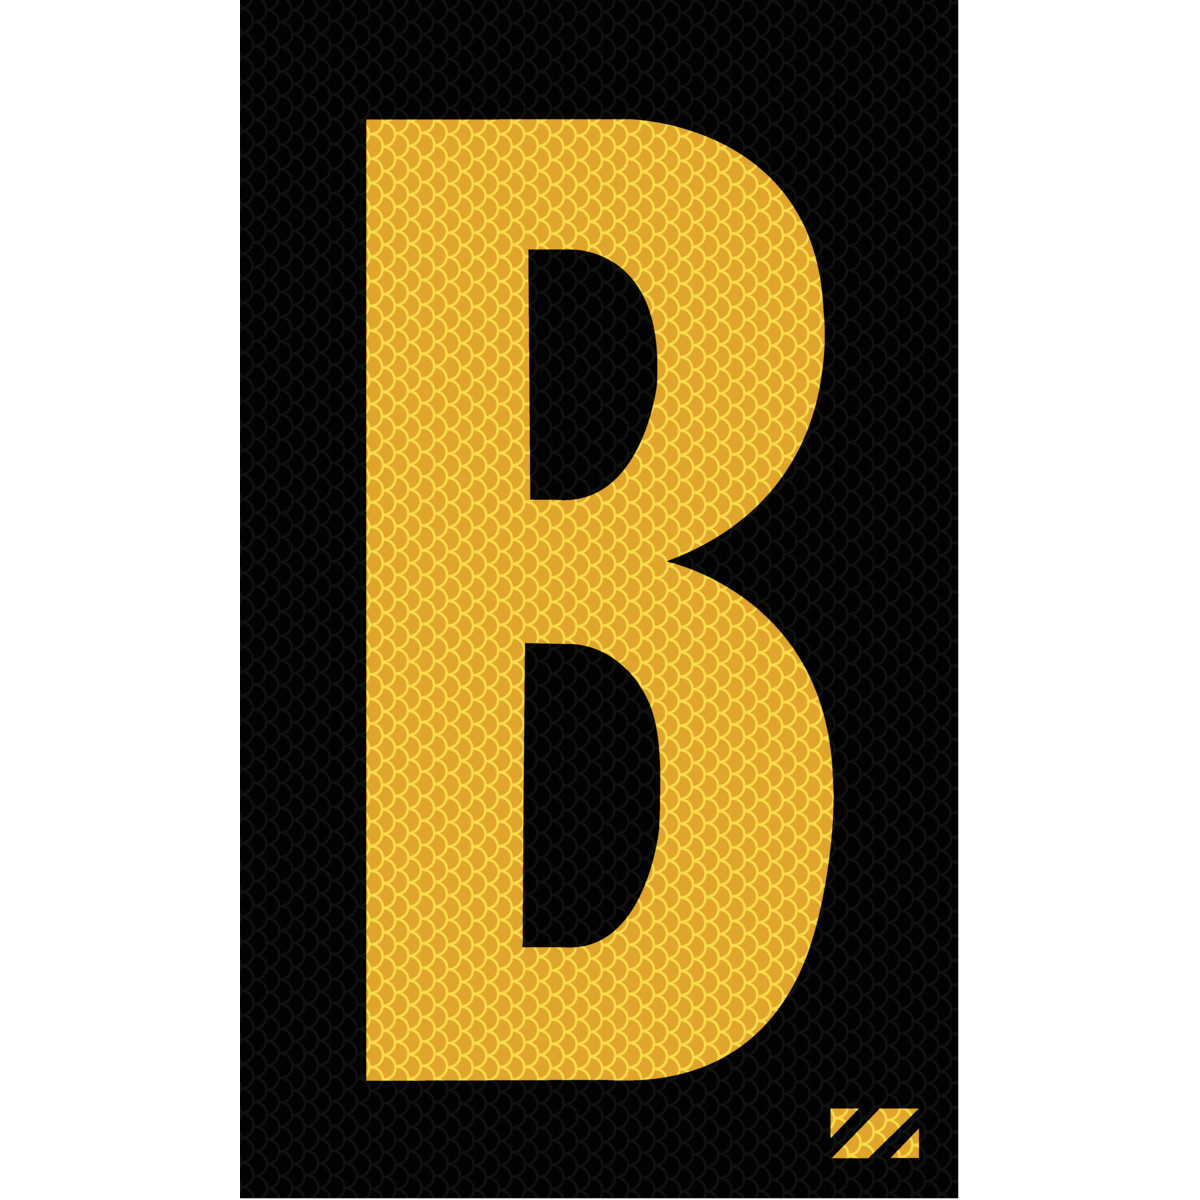 2" Yellow on Black High Intensity Reflective "B"